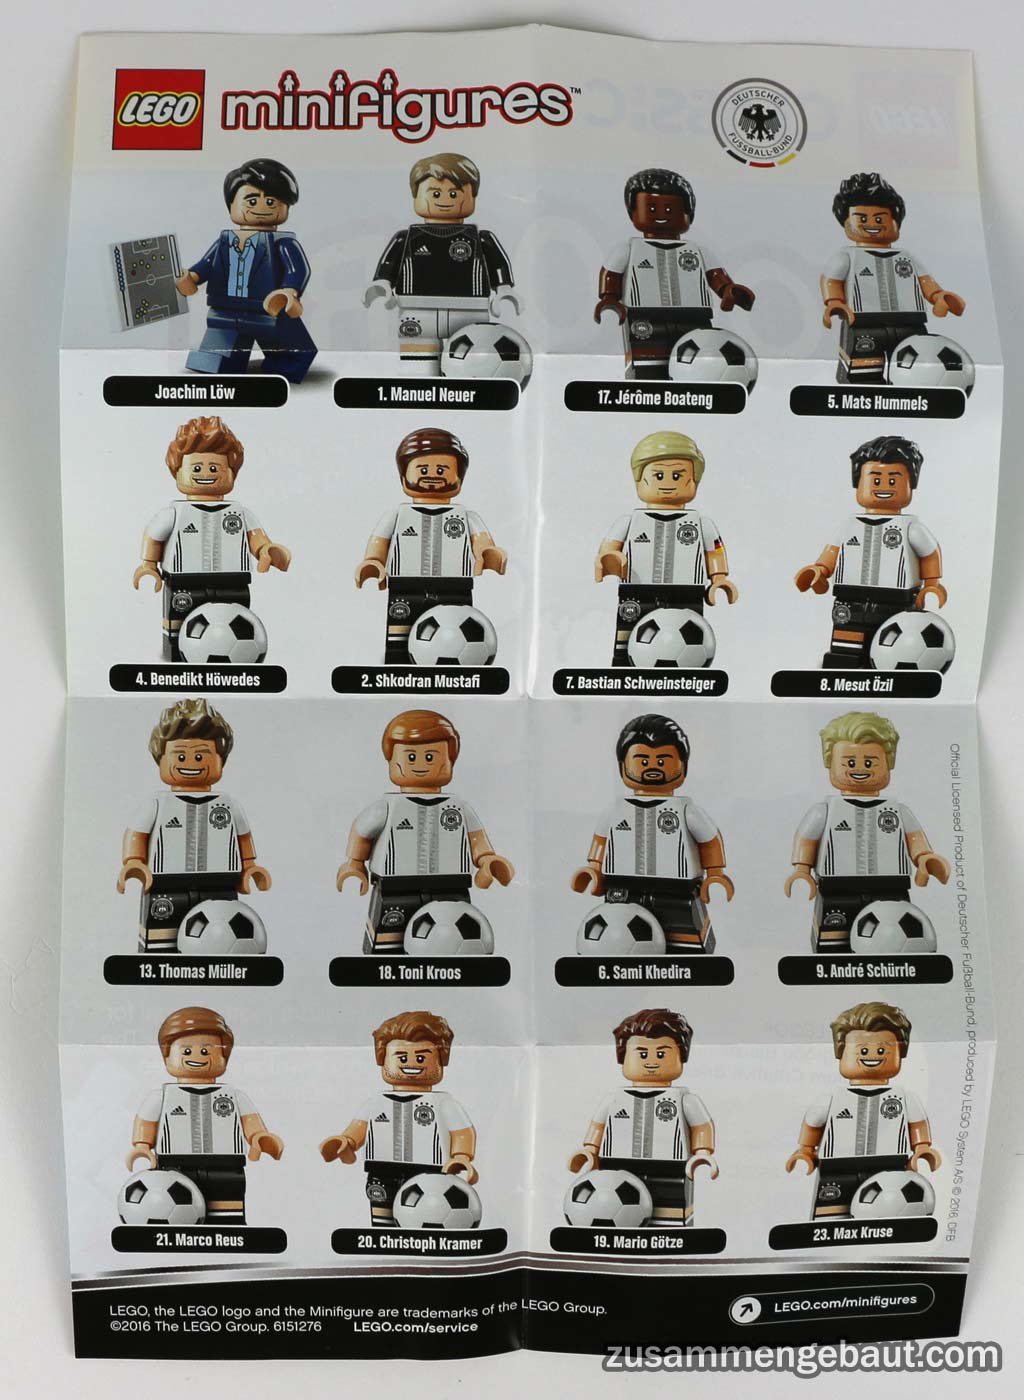 Fußball die Mannschaft 2016 EM LEGO MiniFigur 71014 Kroos Müller Höwedes usw 